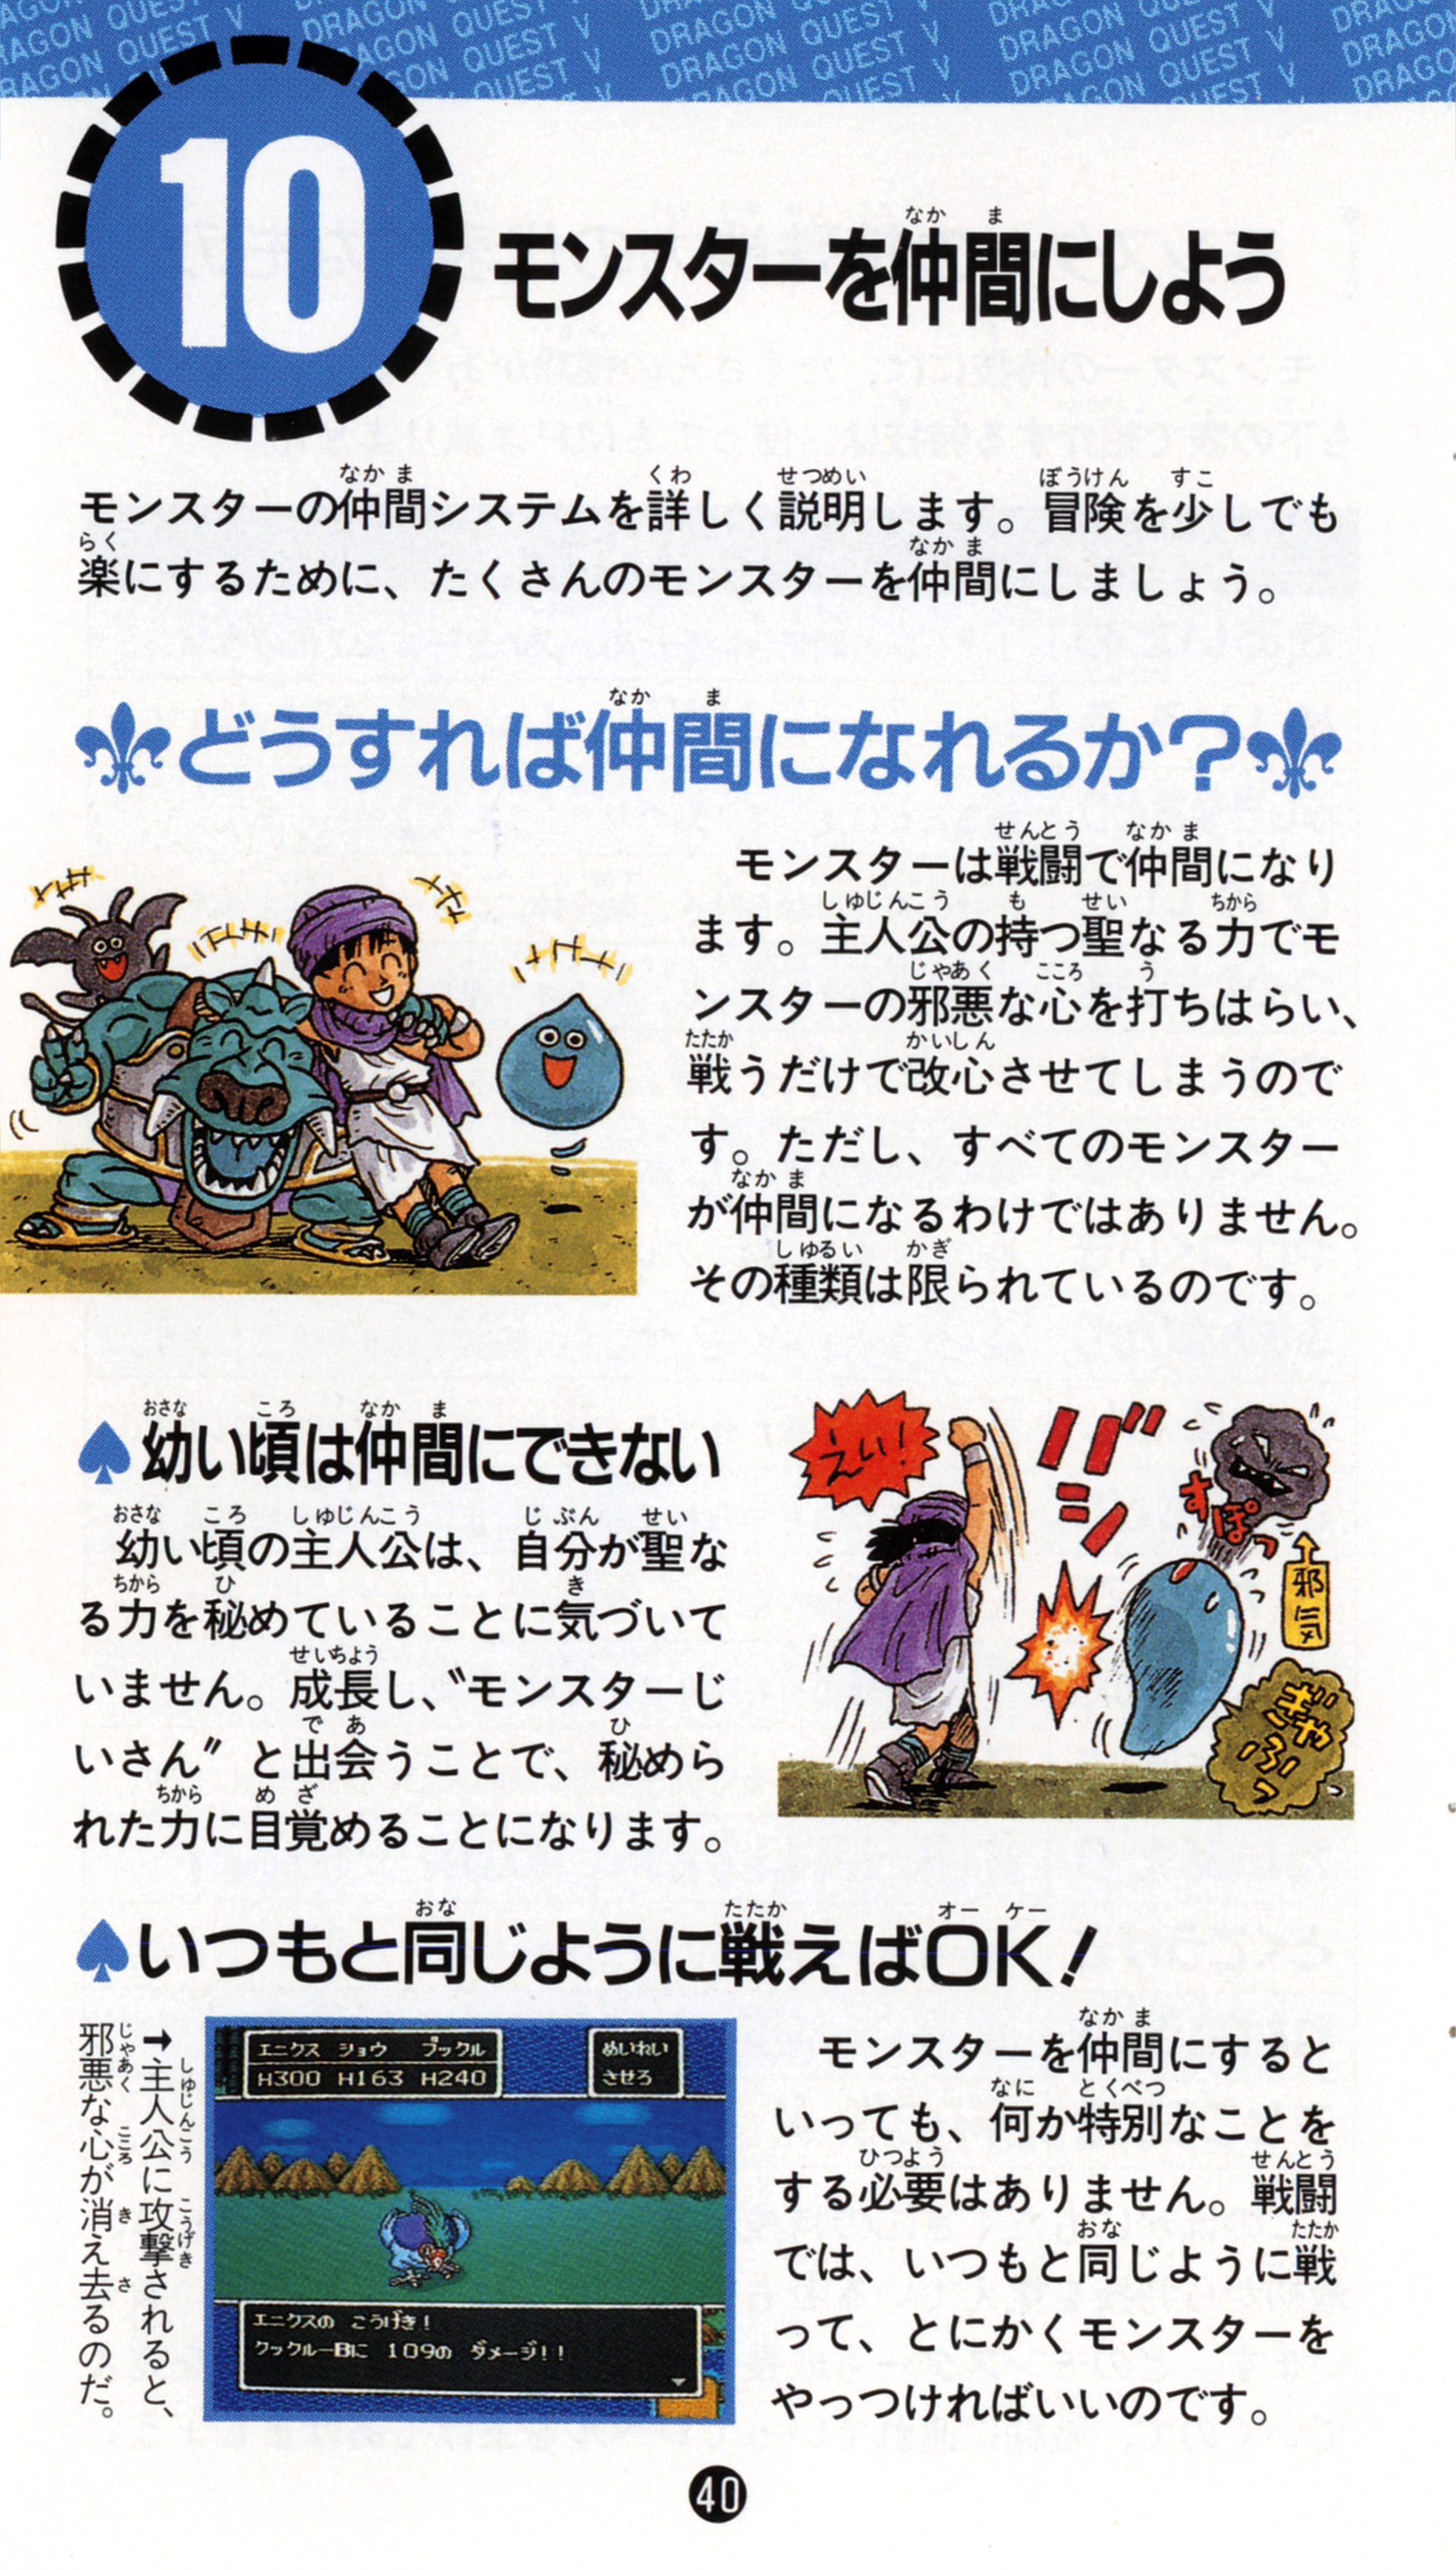 Dragon Quest V [SHVC-D5] (Super Famicom) - Box, Cart, Manual Scans  (1600DPI) : Enix : Free Download, Borrow, and Streaming : Internet Archive